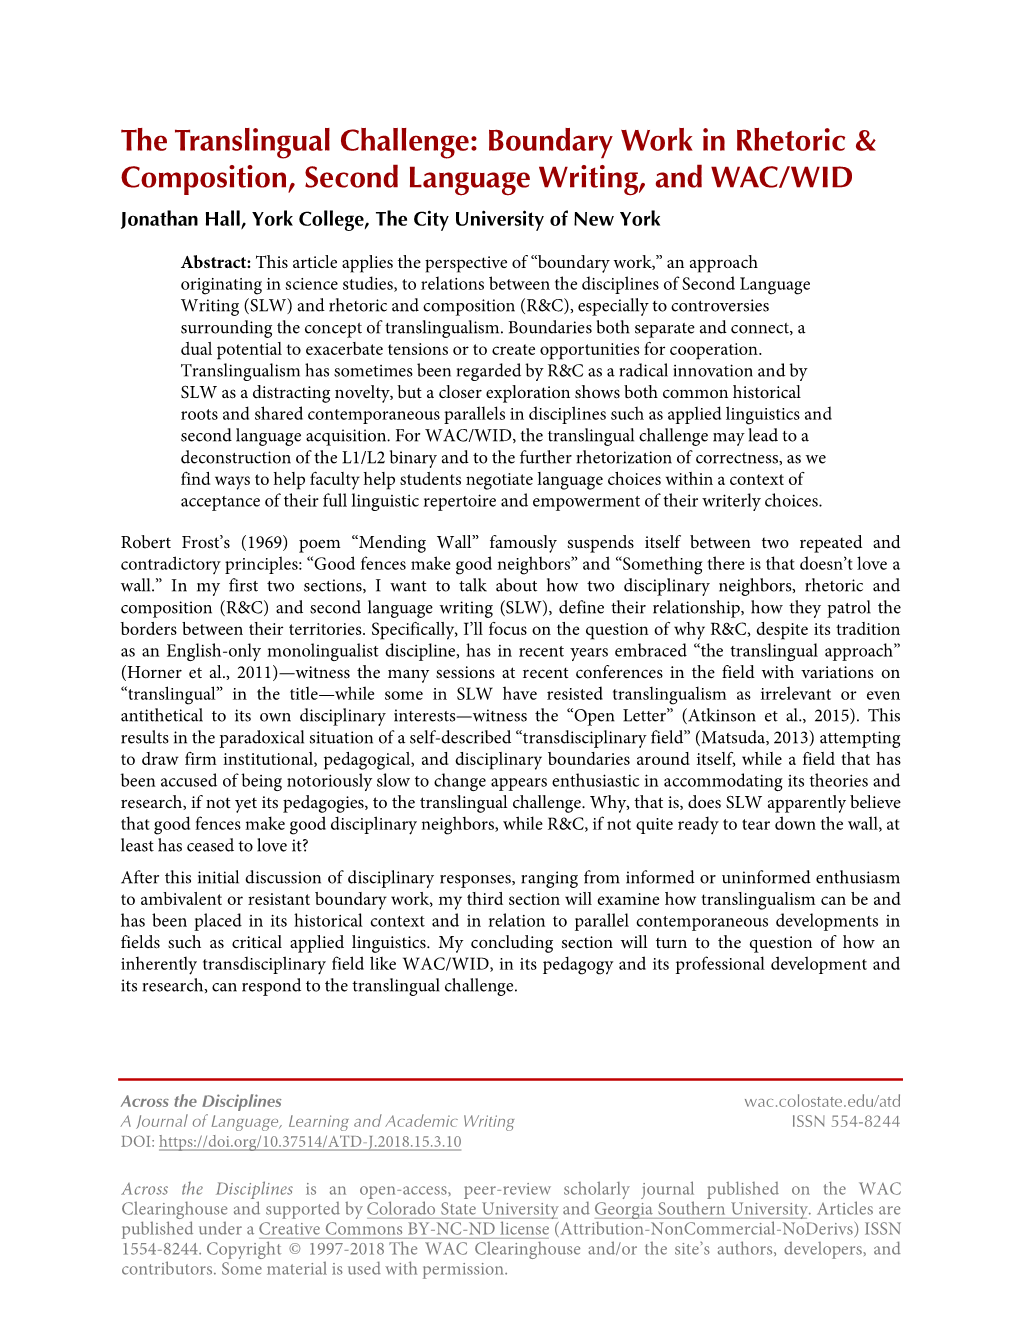 Boundary Work in Rhetoric & Composition, Second Language